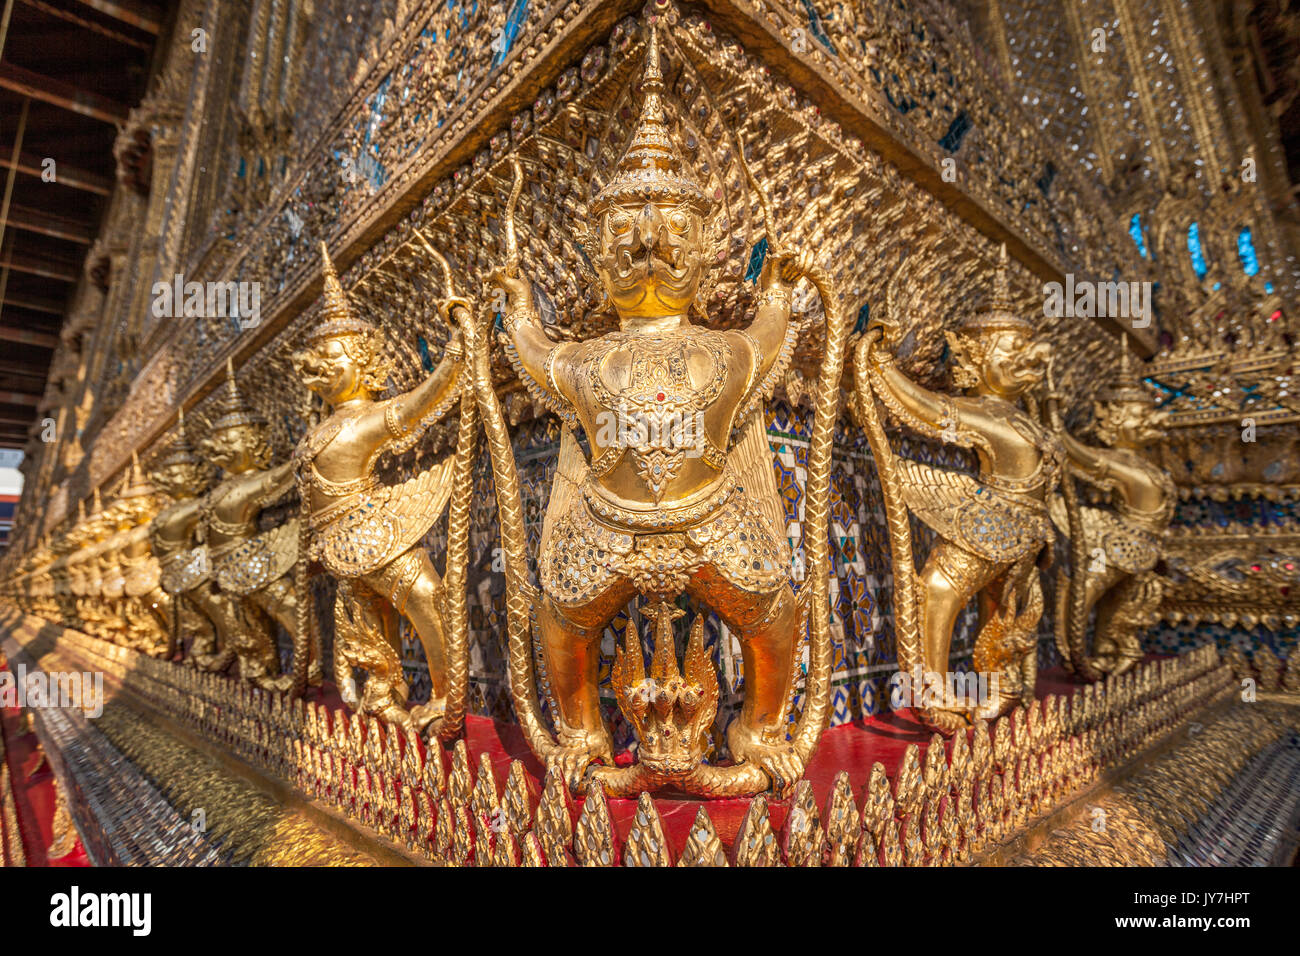 Garudas fabeltiere als externe guardian Statuen des Smaragd Buddha, Wat Phra Kaew Tempel, Grand Palace, Bangkok, Thailand Stockfoto